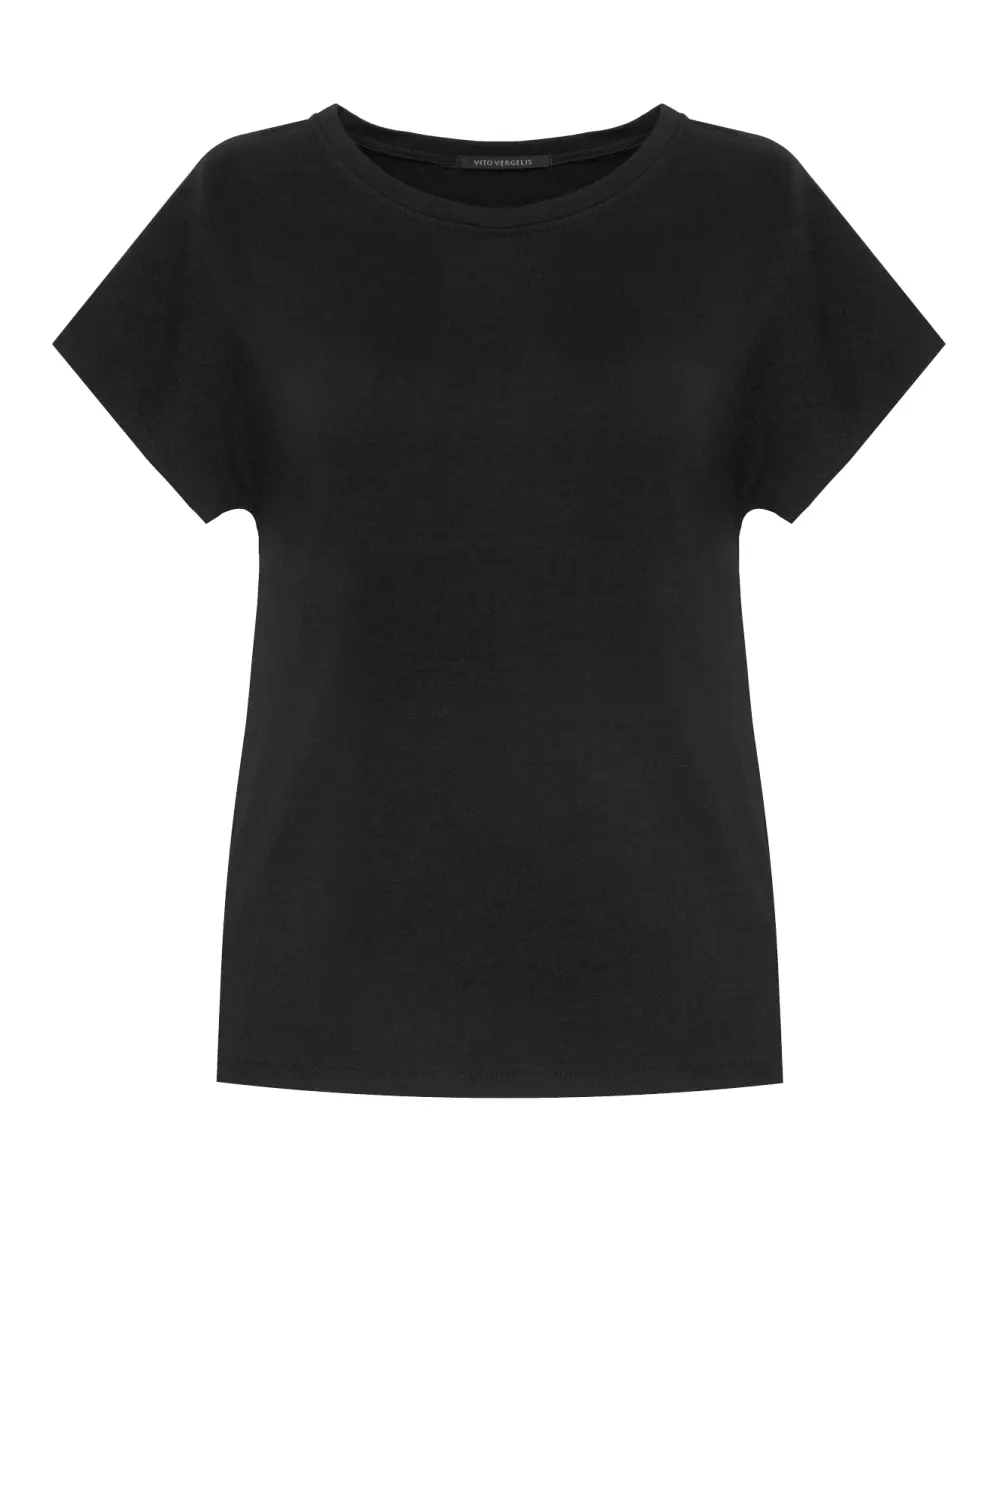 Czarna bluzka damska z krótkim rękawem z micromodalu polska marka Vito Vergelis